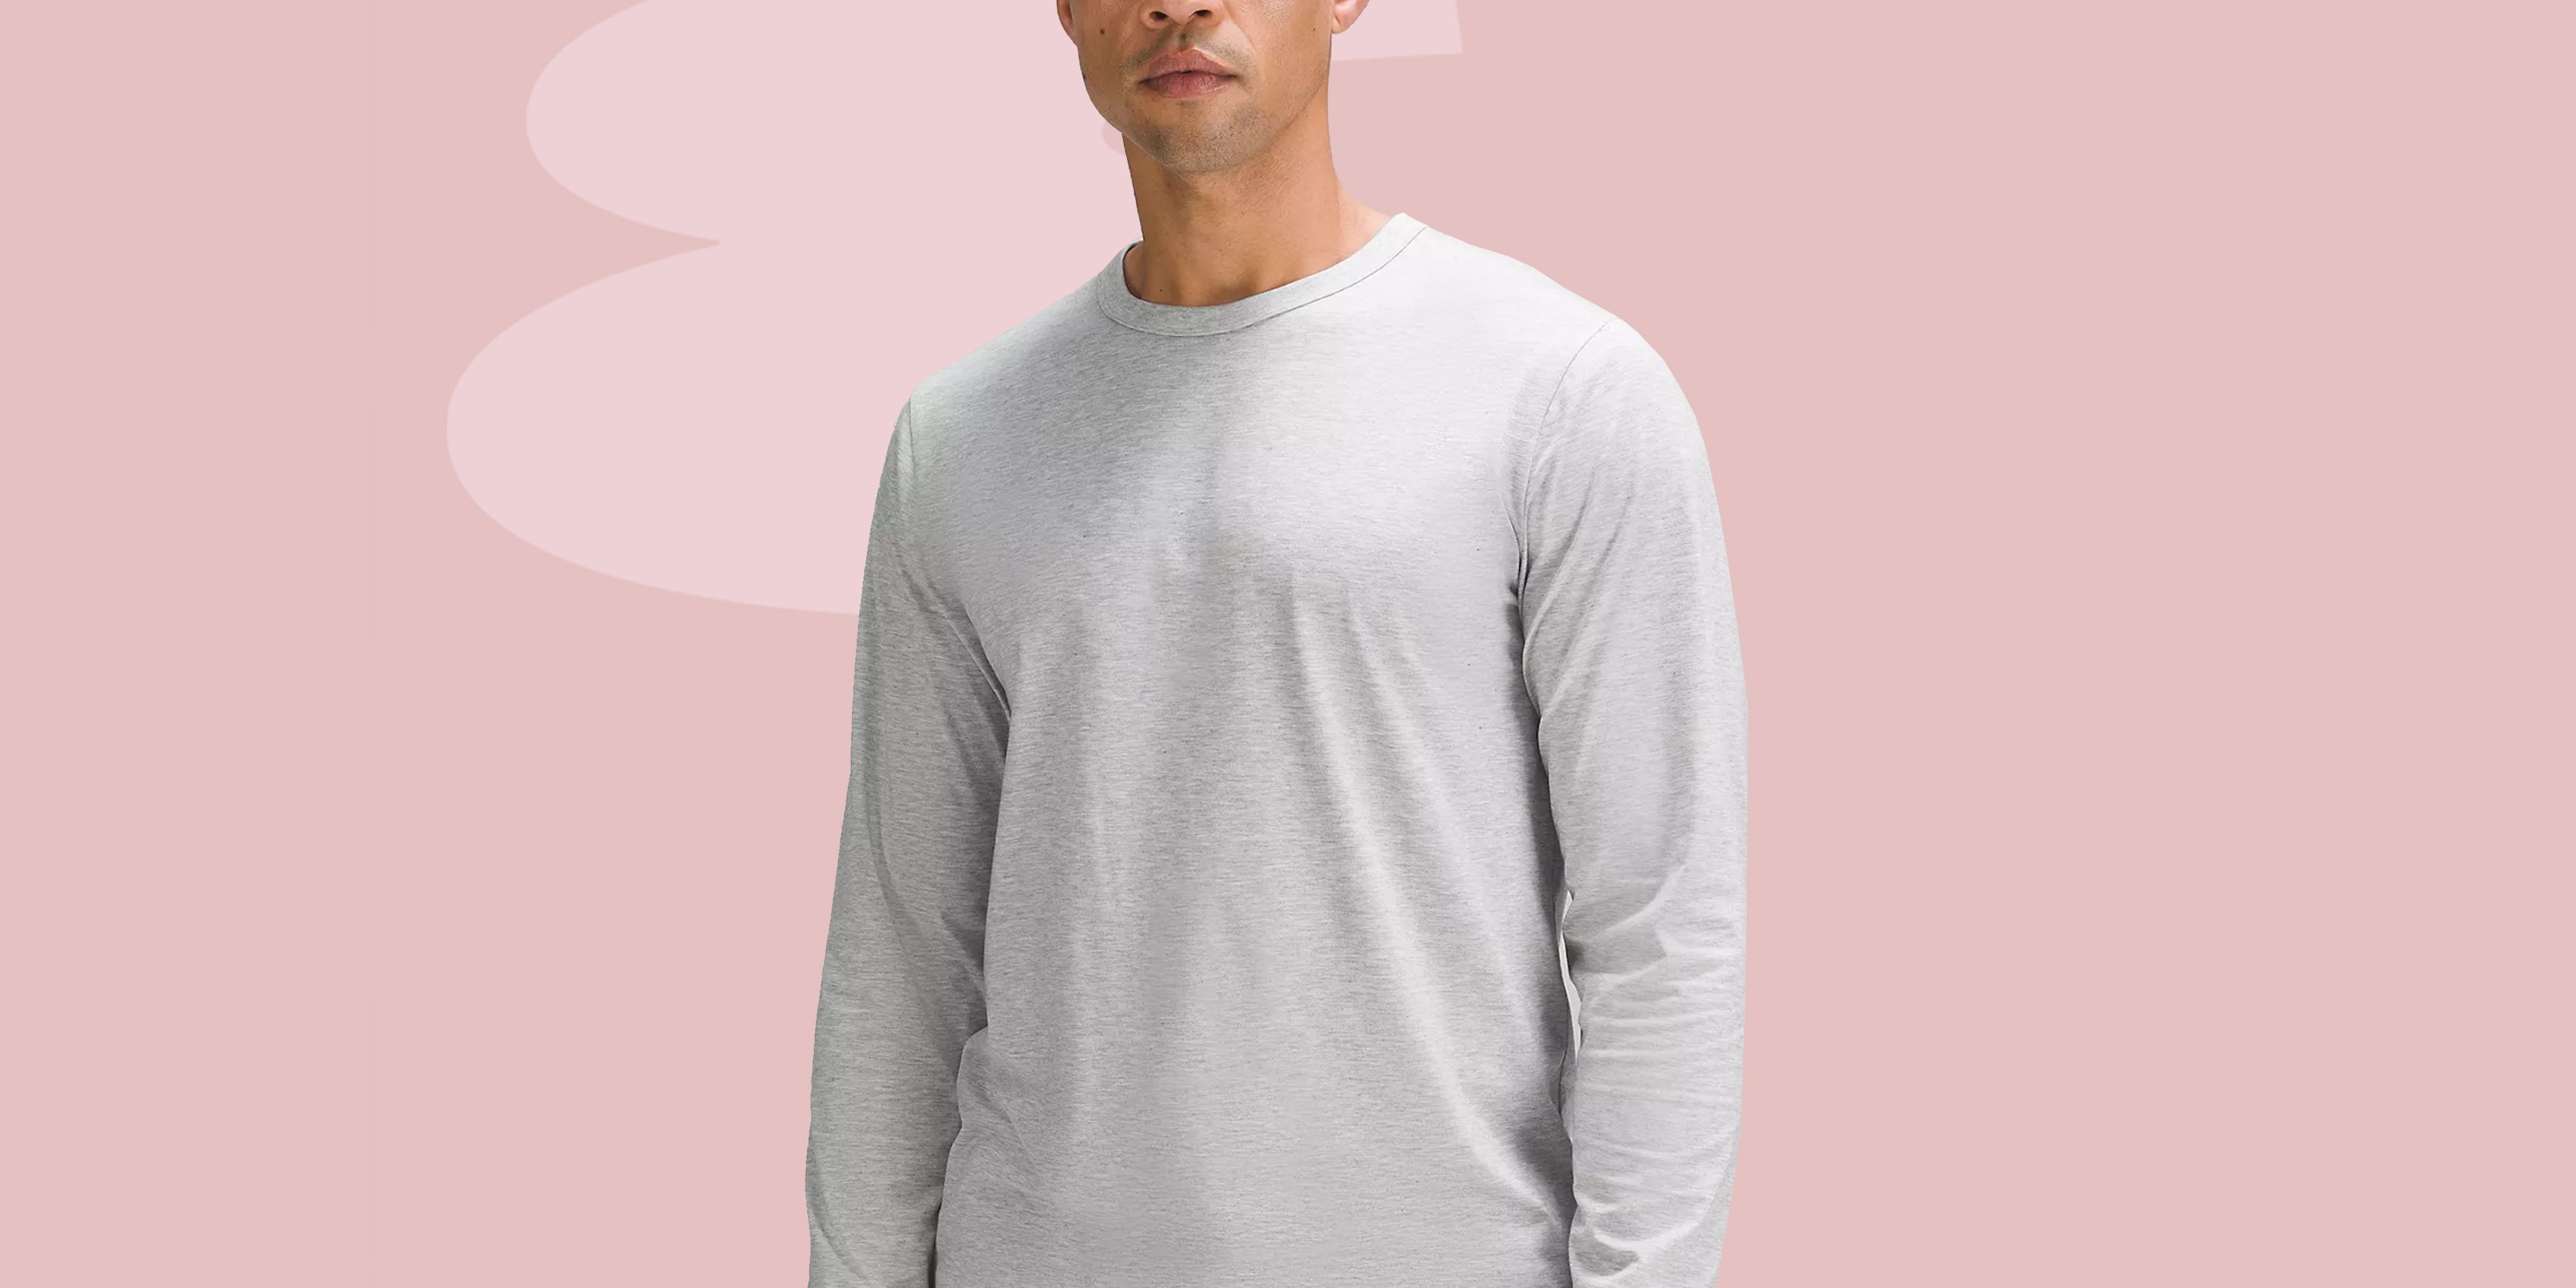 Mens Long Sleeve T-Shirt 100% Cotton Plain Crew Round Neck Casual Tee Tops  S-3XL 